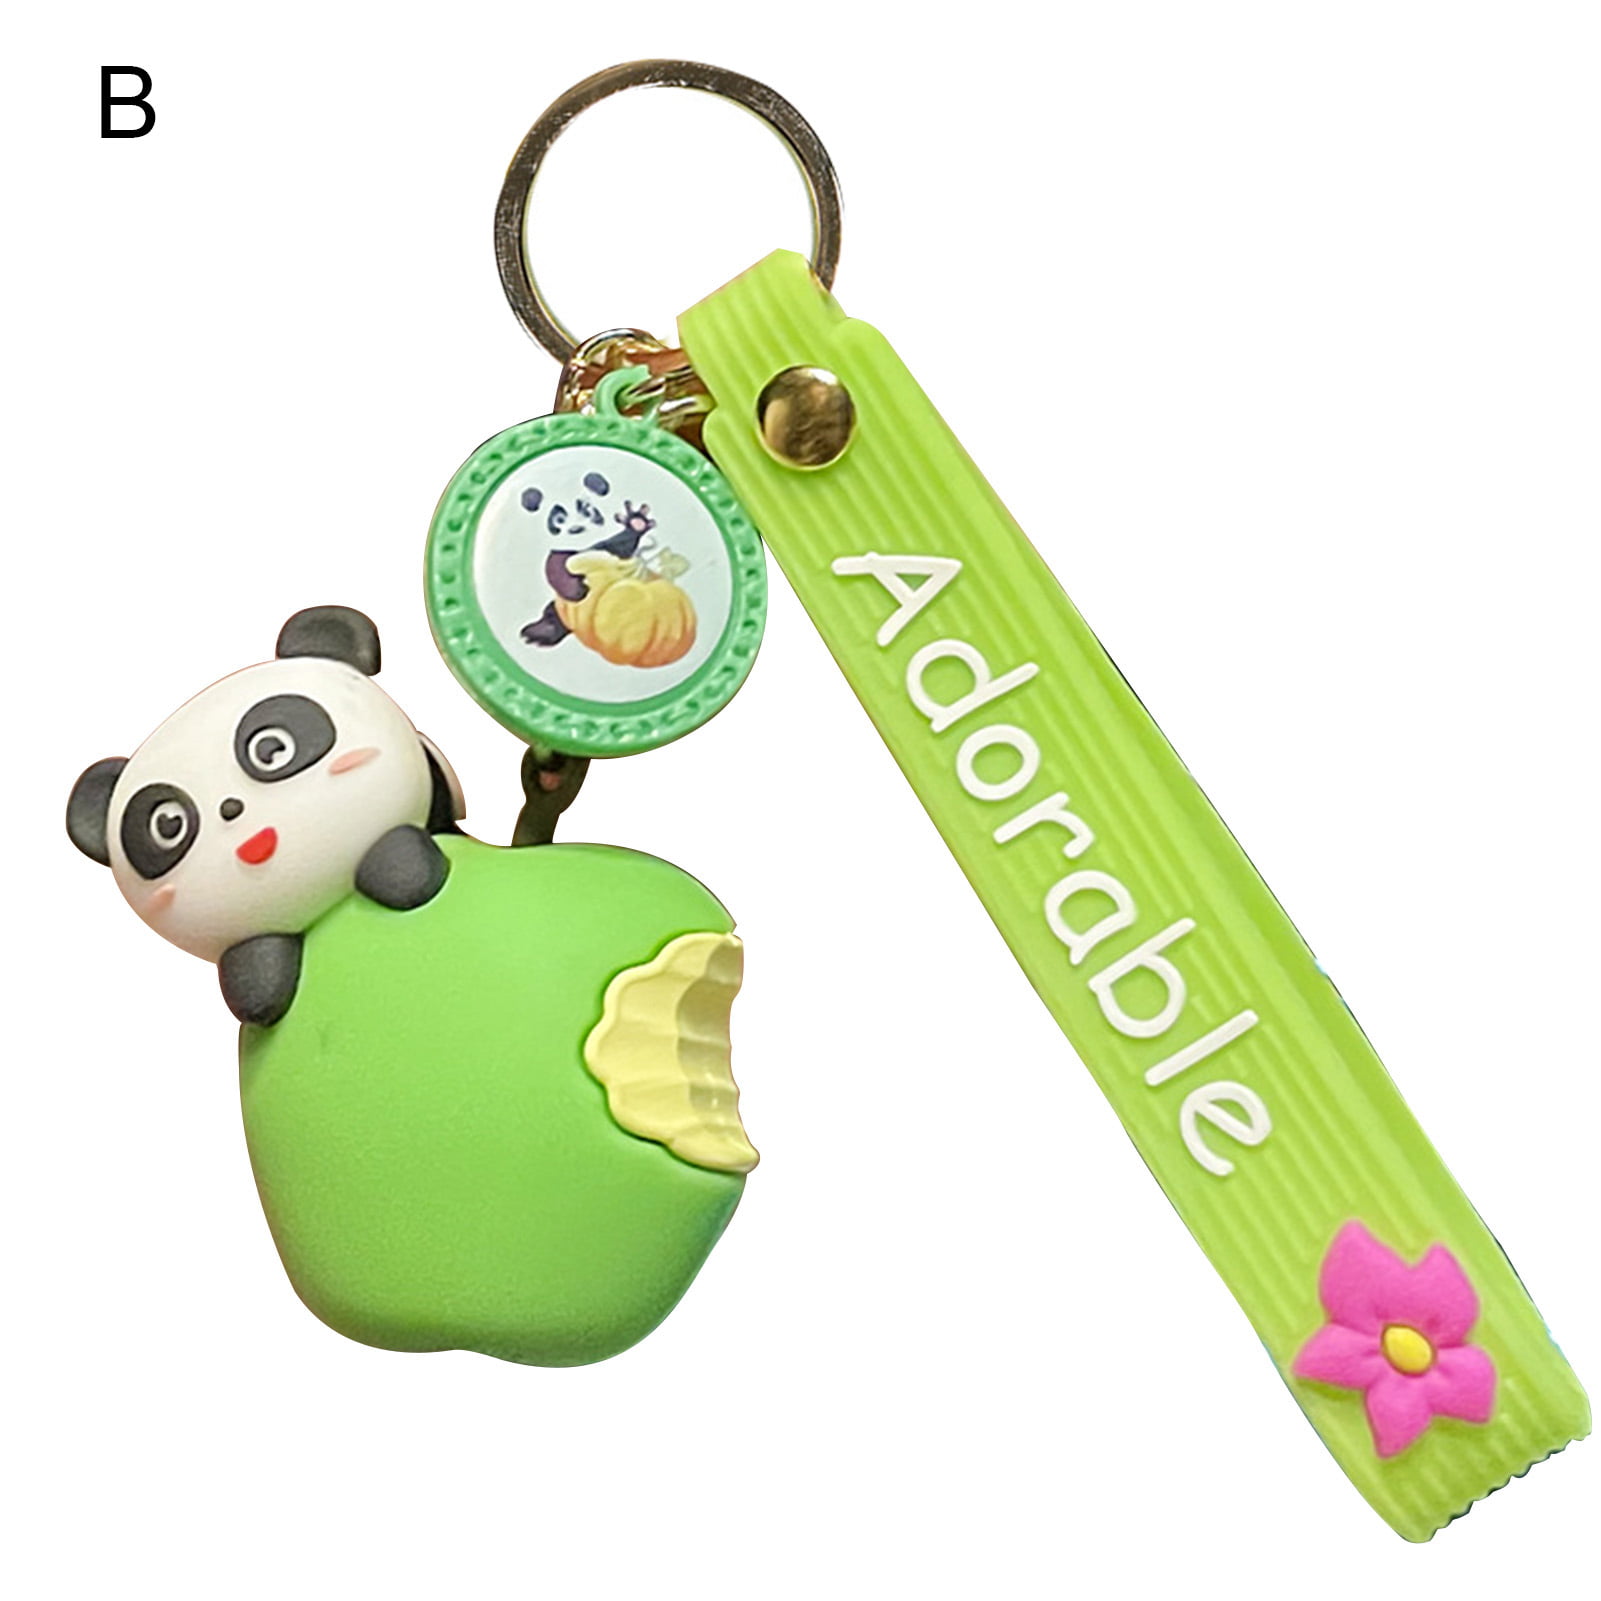 Sport Style Cartoon Skating Panda Keychain Charms Girls Creative Cute  Animal Bag Ornaments Key Ring Accessories Gift